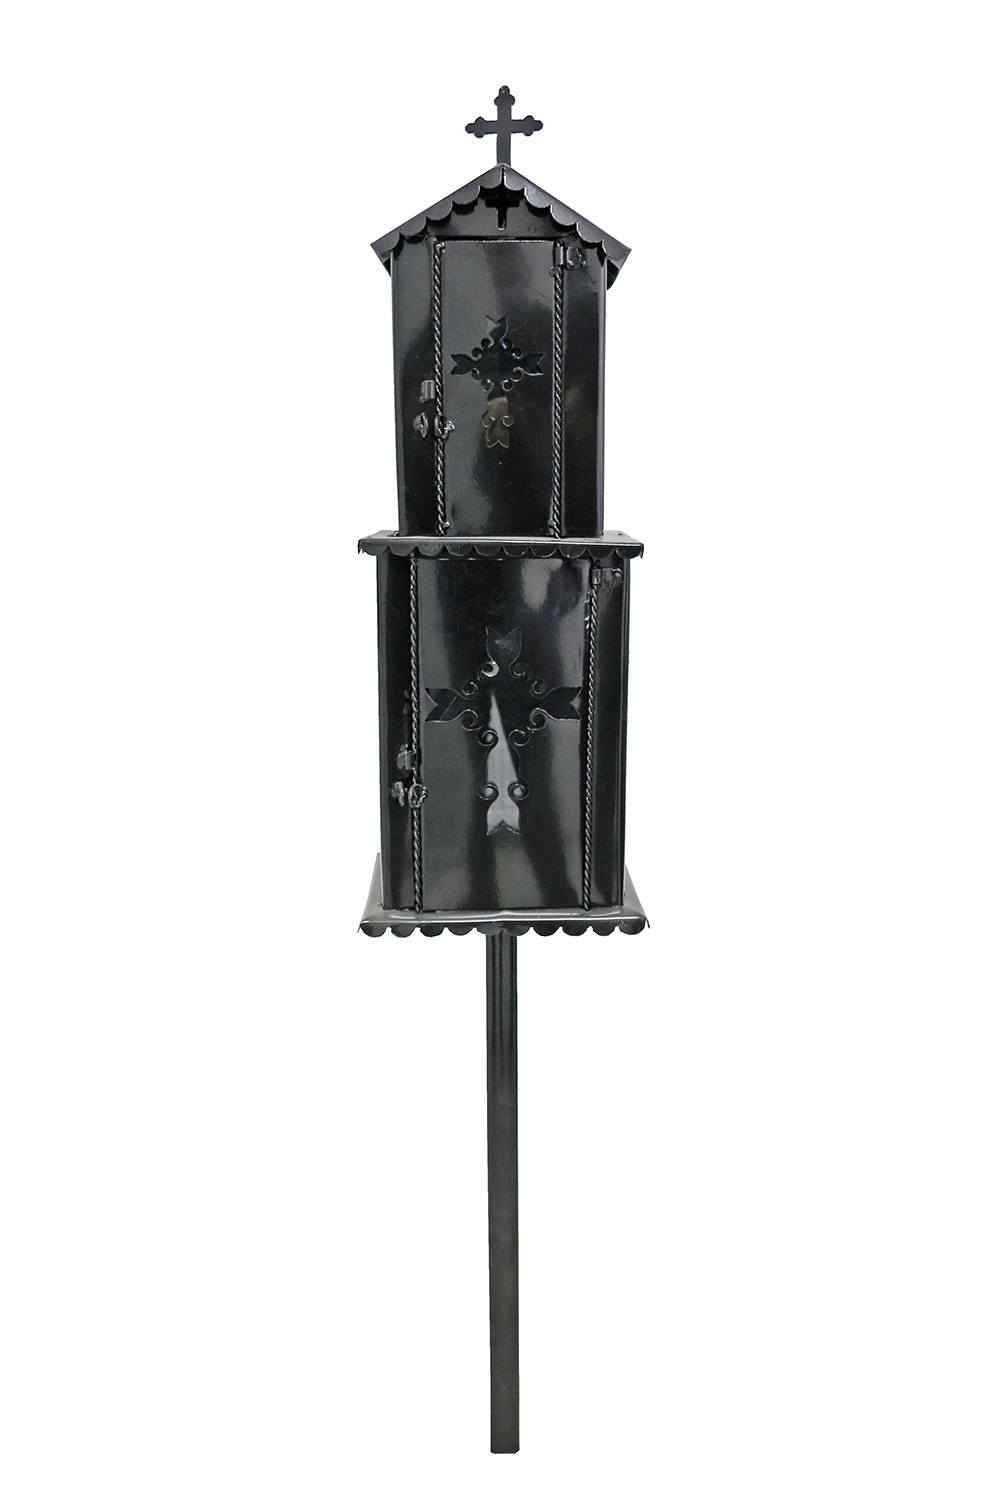 Felinar metalic dublu pentru cimitir, GRS, F7, vopsit electrostatic, tip structurat, Negru, cu picior, 130×24 cm